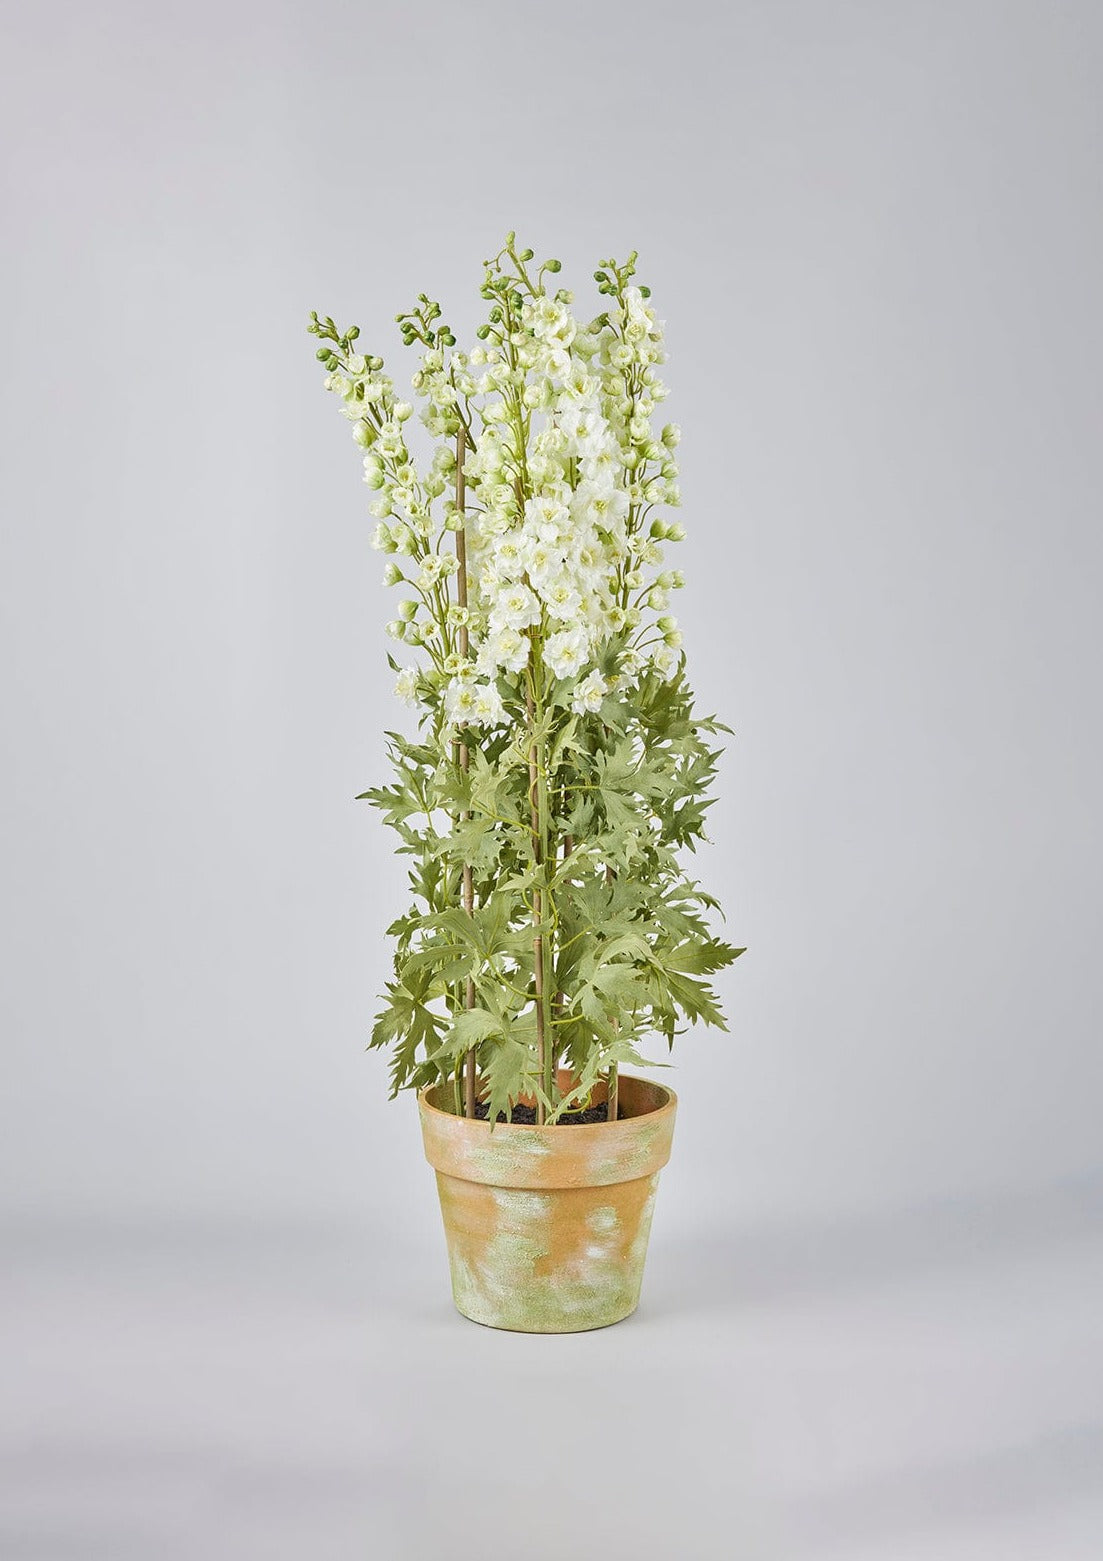 Afloral Faux Potted Floor Plant of White Delphinium Flowers